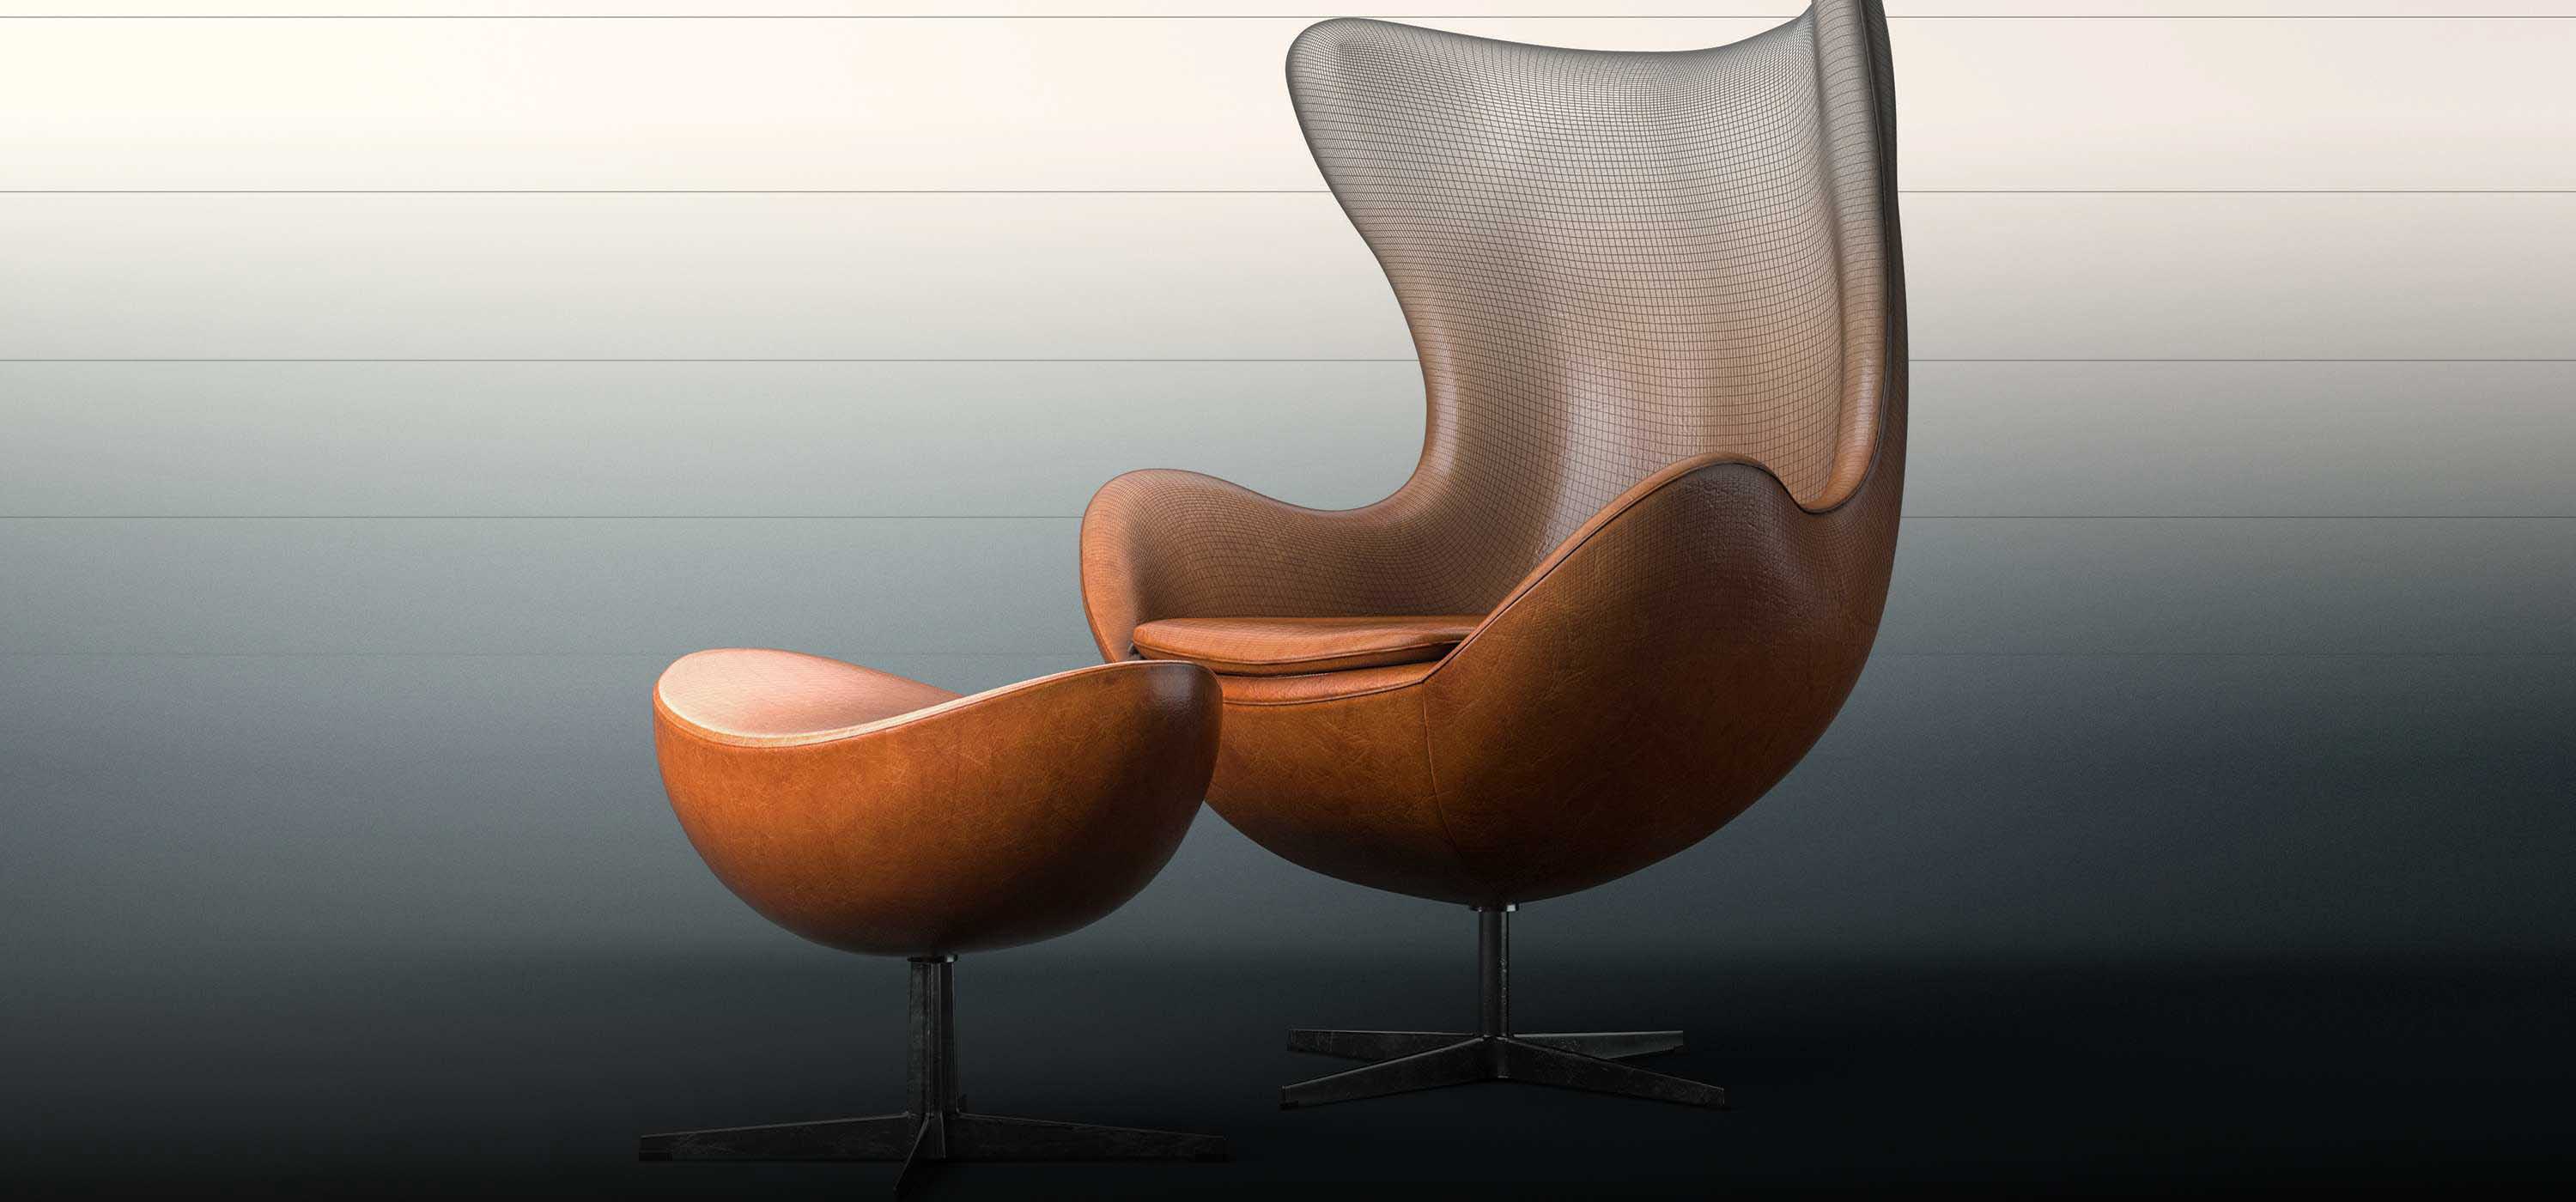 Arne Jacobsen Chair 3D Model | C4D FBX OBJ CGI Asset PRO EDU cgi for photographers certified maxon training center.